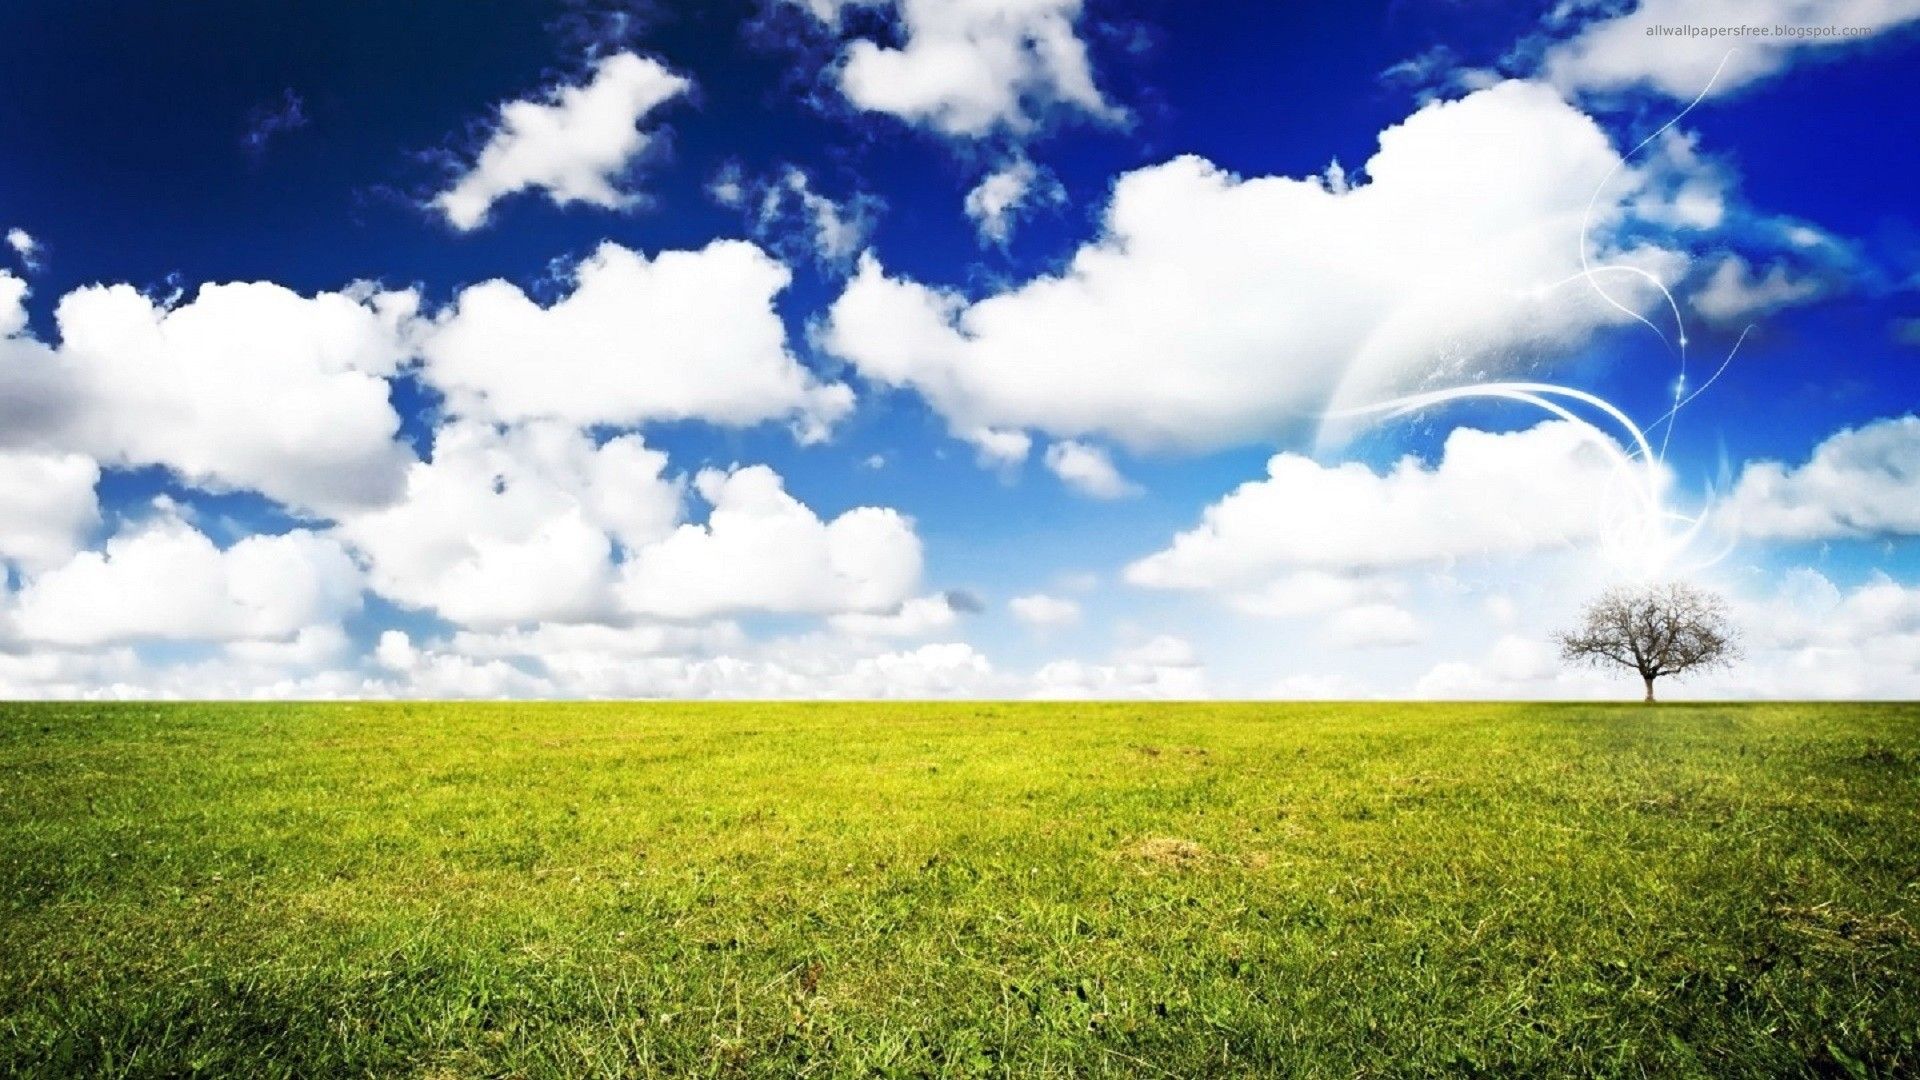 Nature wallpaper - Sky, Powderblue | Wallpaper free hd downloads ...